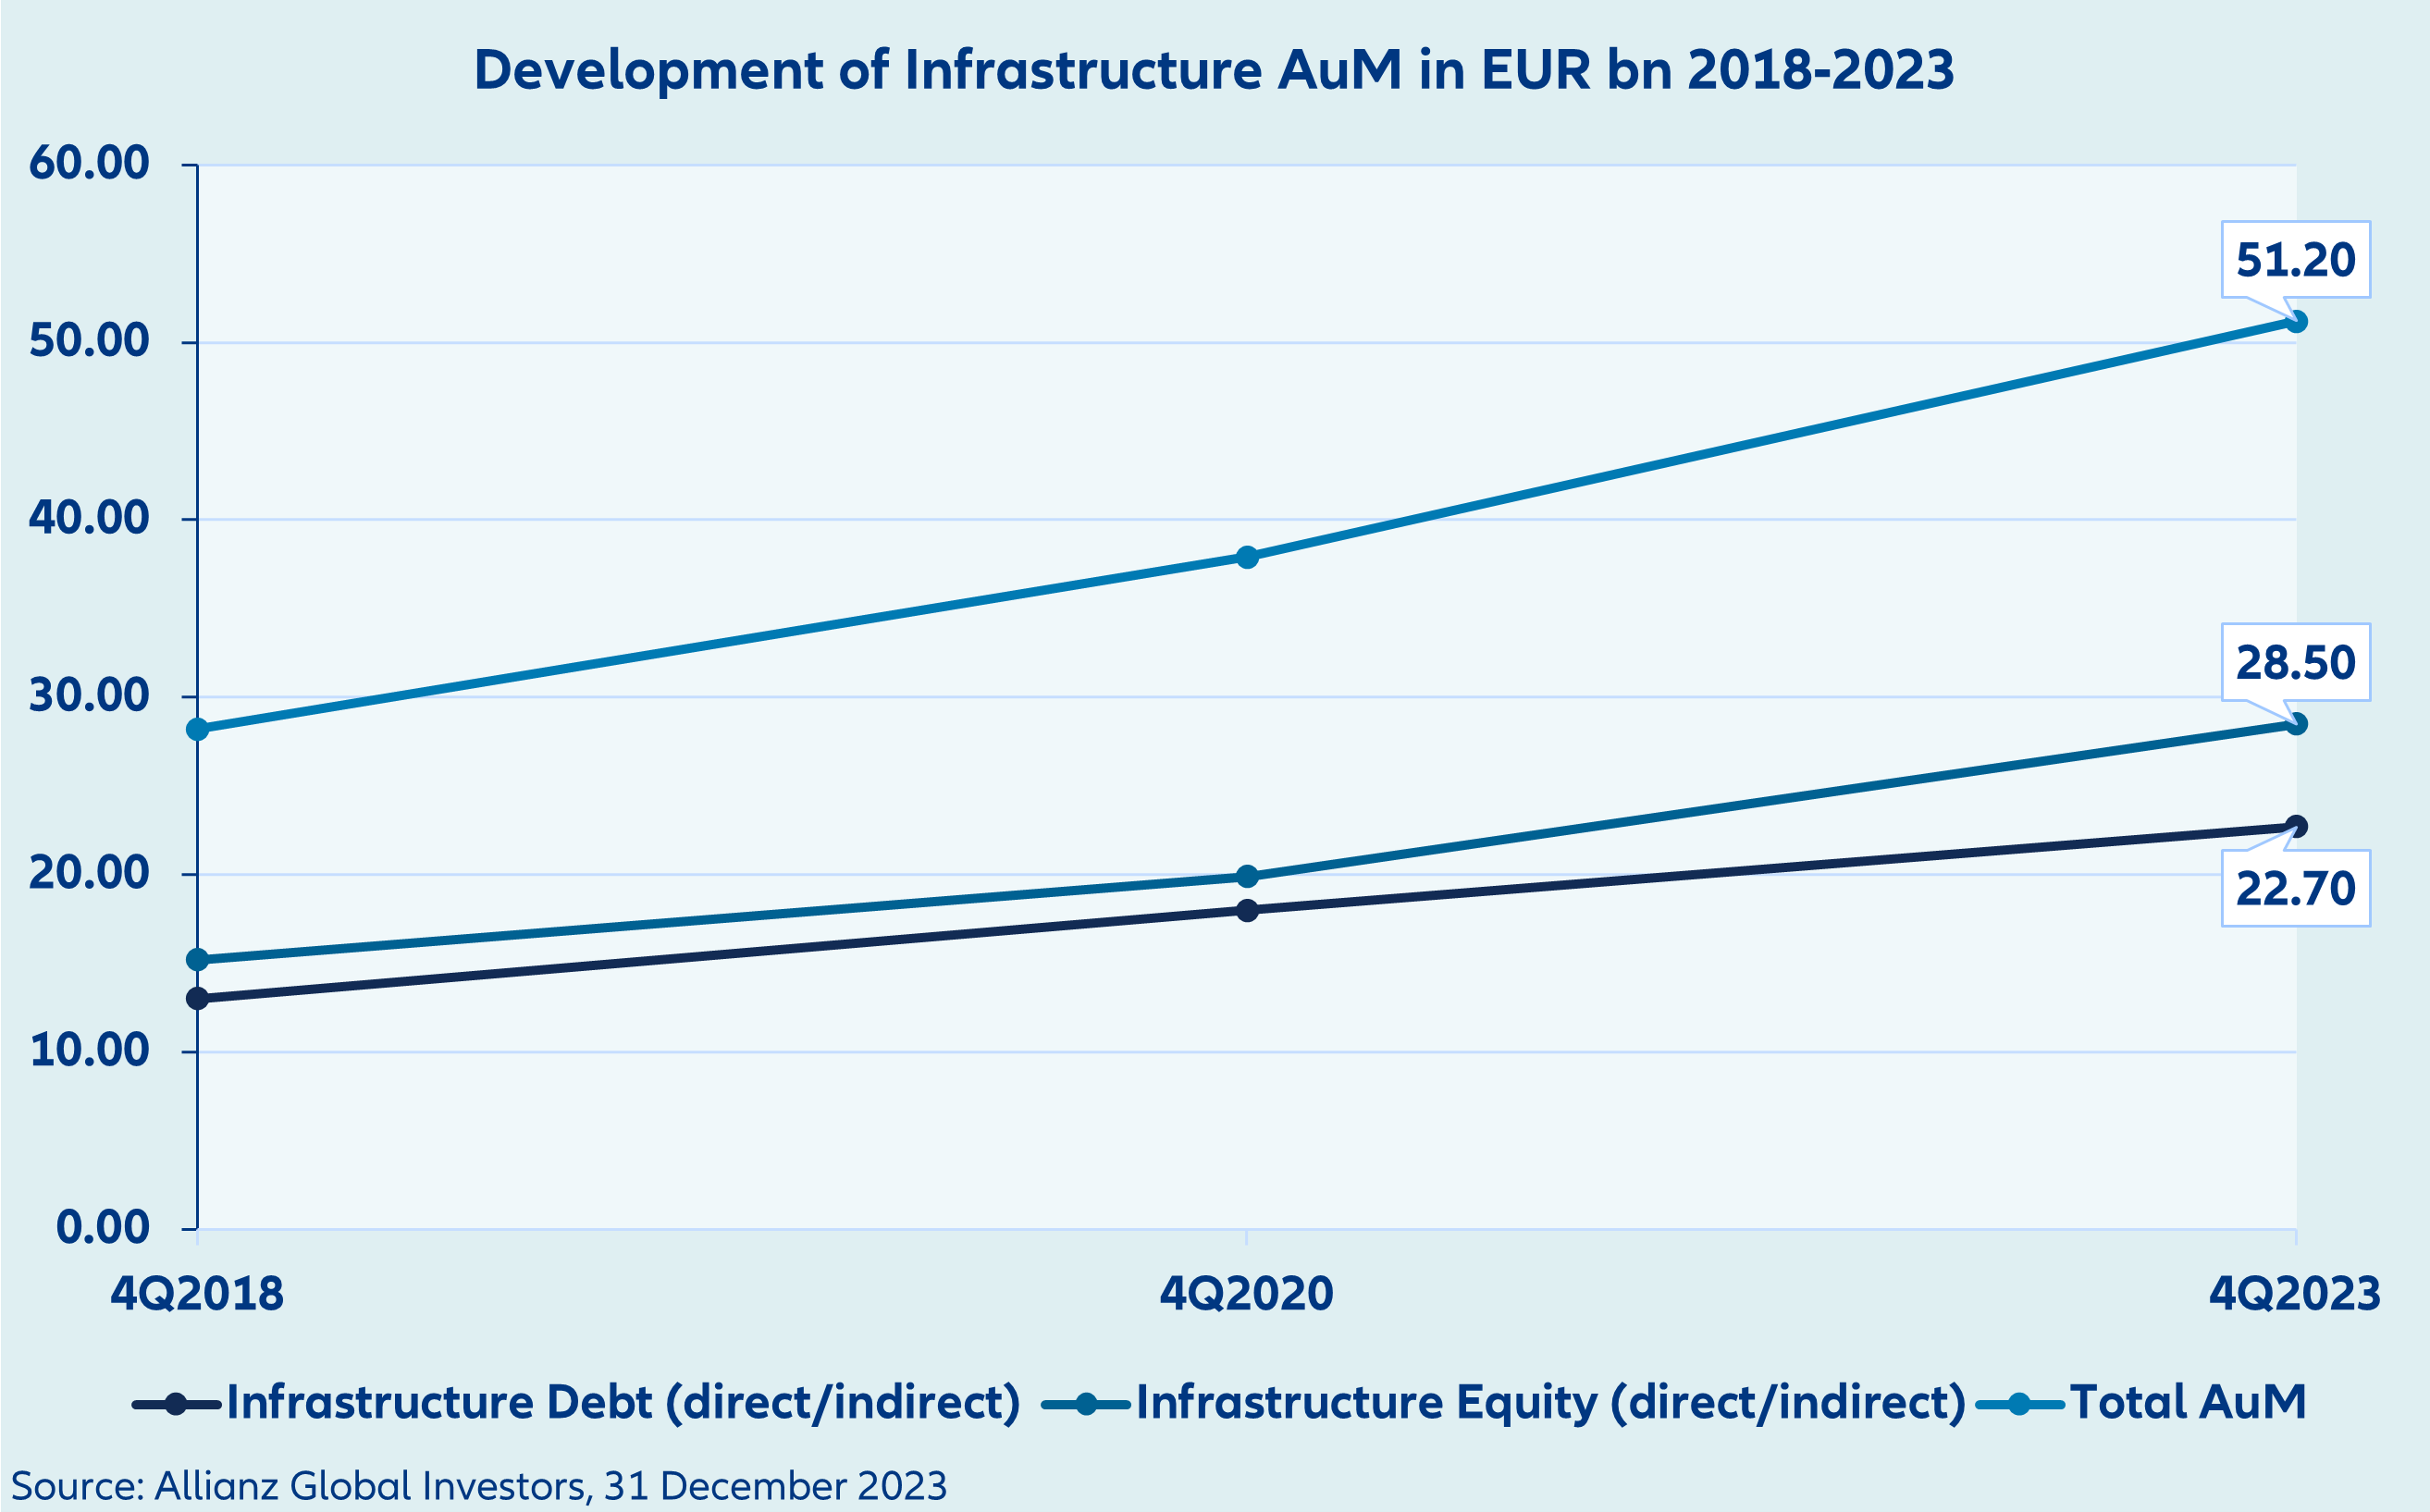 AllianzGI with over EUR 50 billion AuM in infrastructure